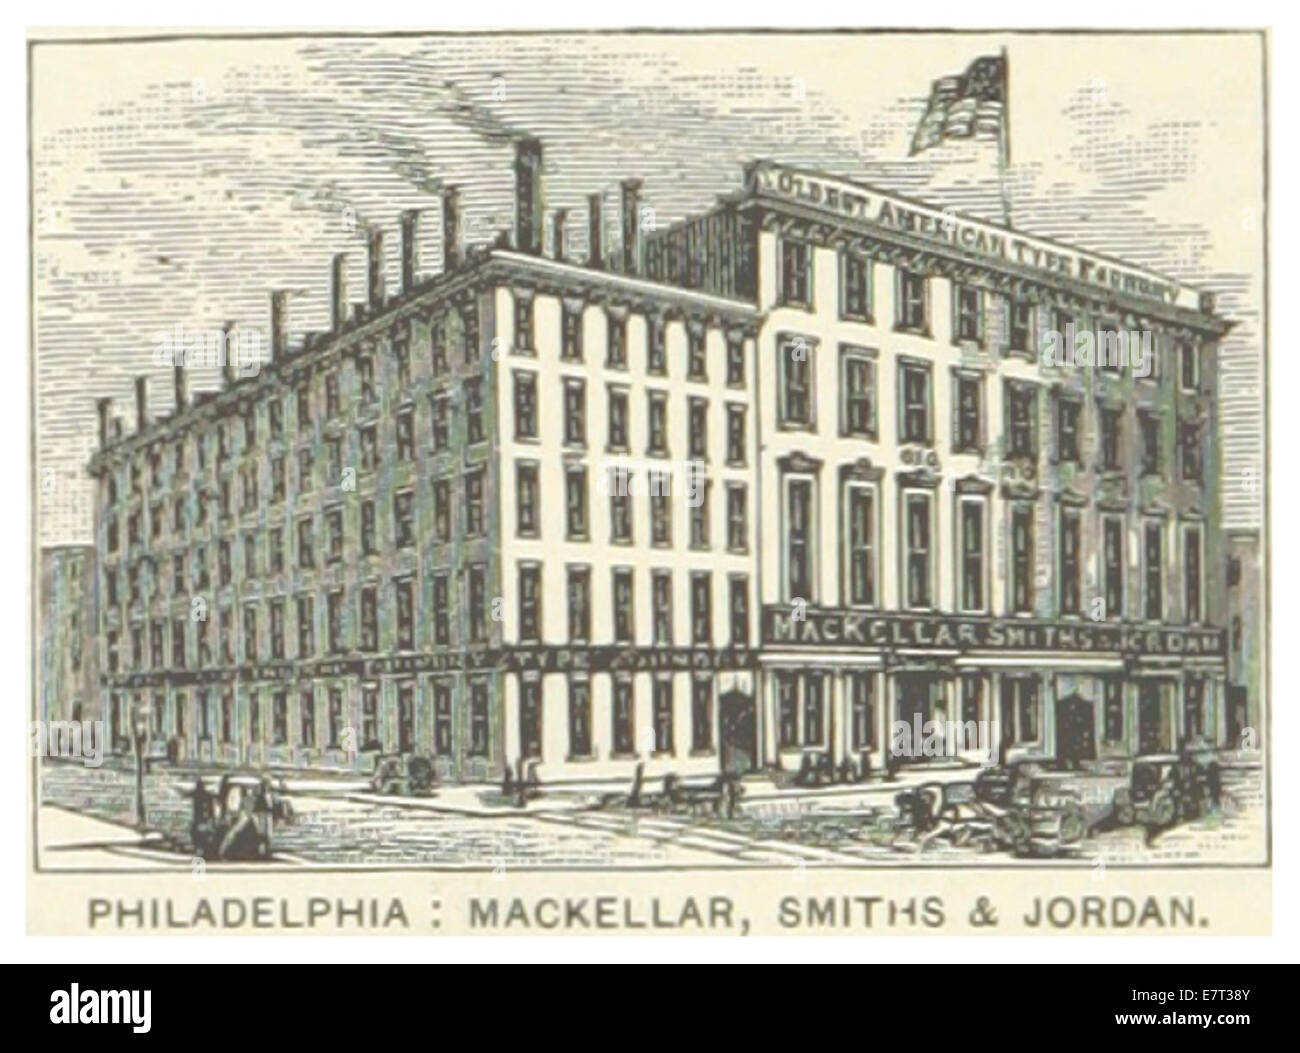 US-PA(1891) p744 PHILADELPHIA, MACKELLAR, SMITH & JORDAN Stock Photo